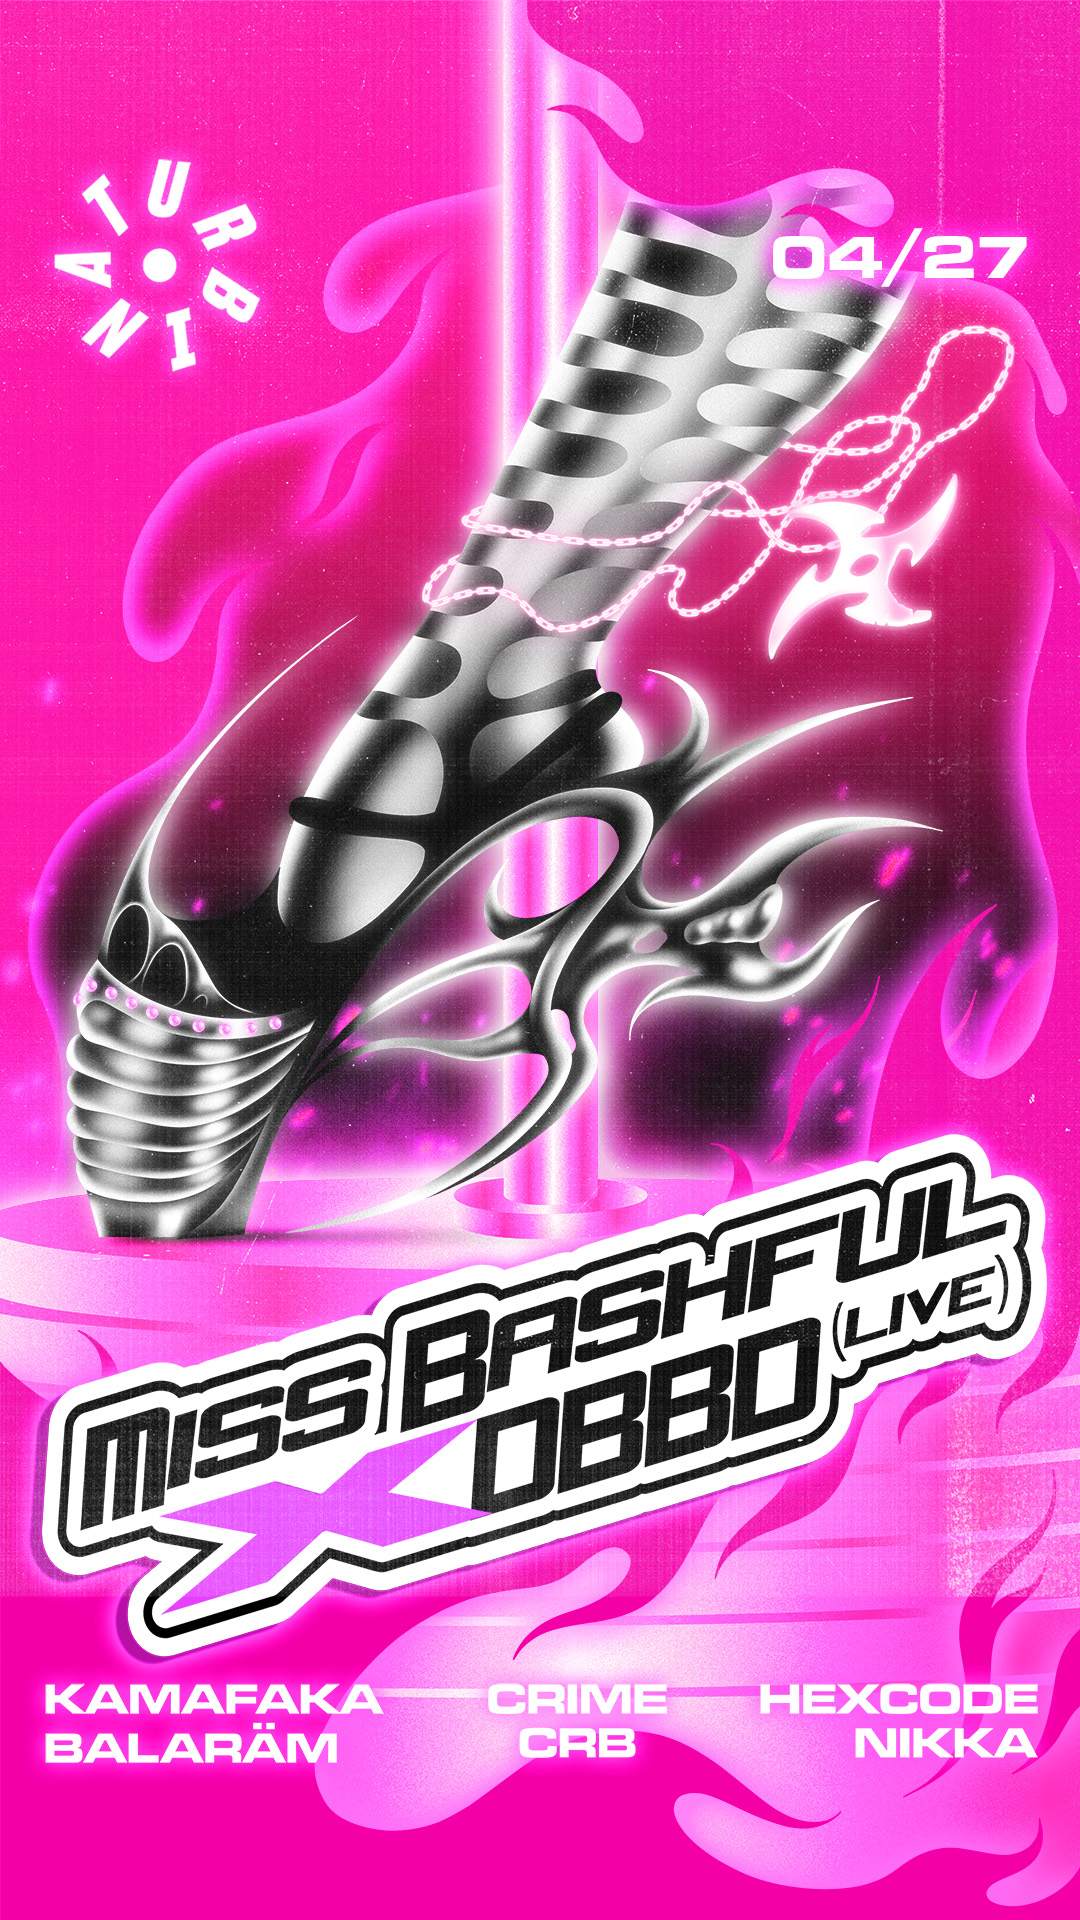 Crime with Miss Bashful & DBBD (live) - Página frontal